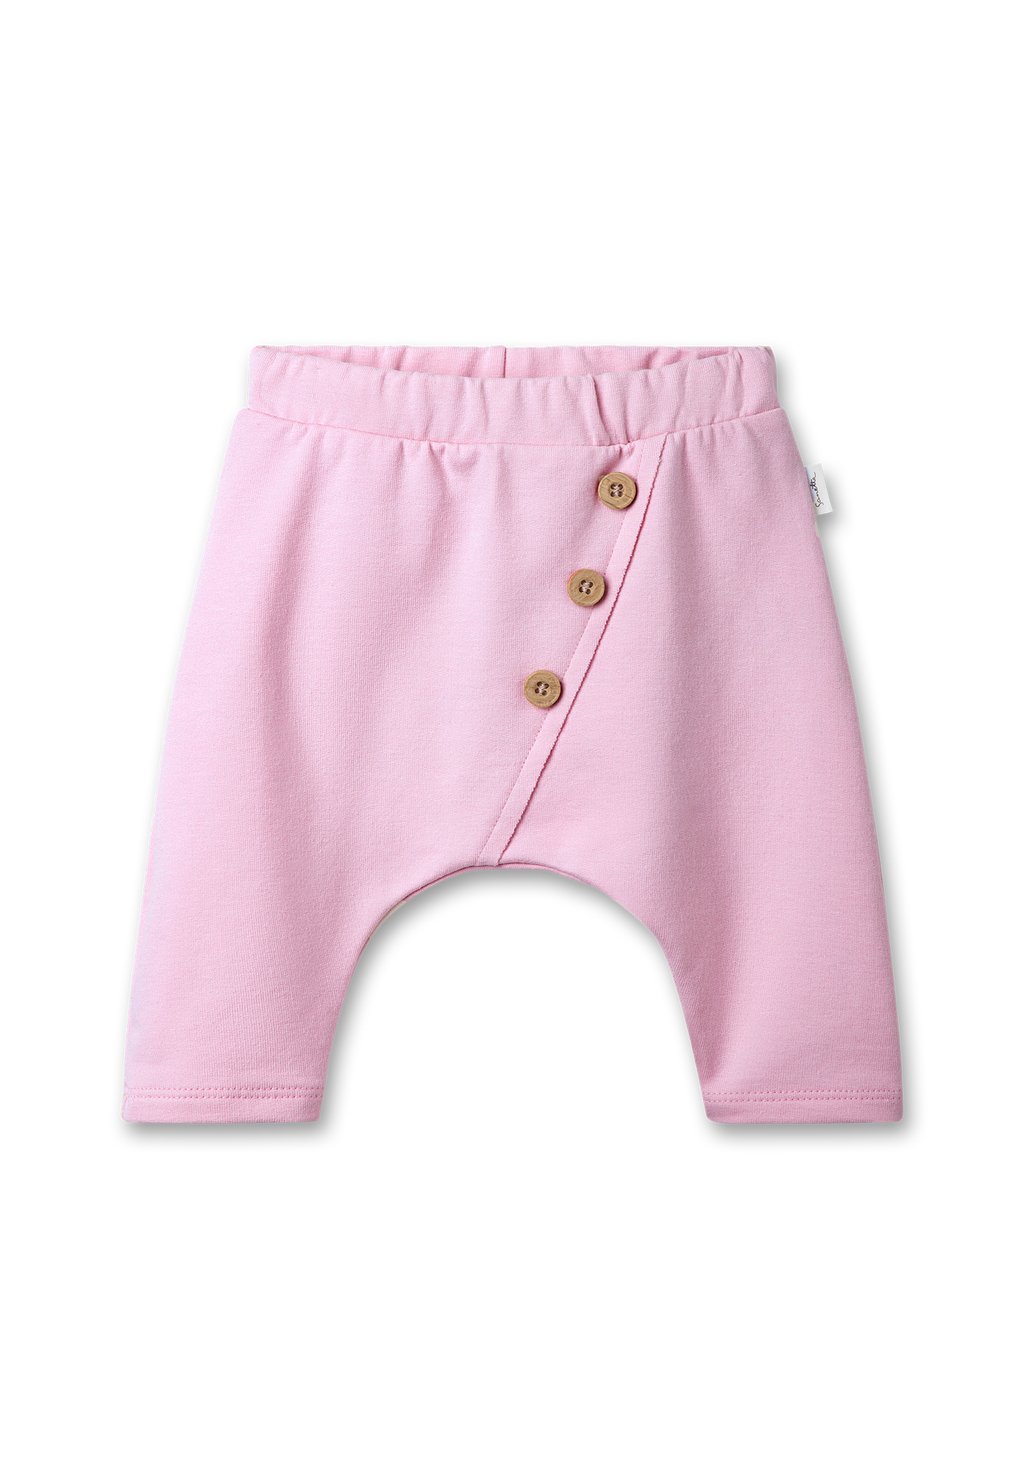 Брюки из ткани Sanetta Pure, цвет rosa брюки из ткани sanetta pure цвет rosa